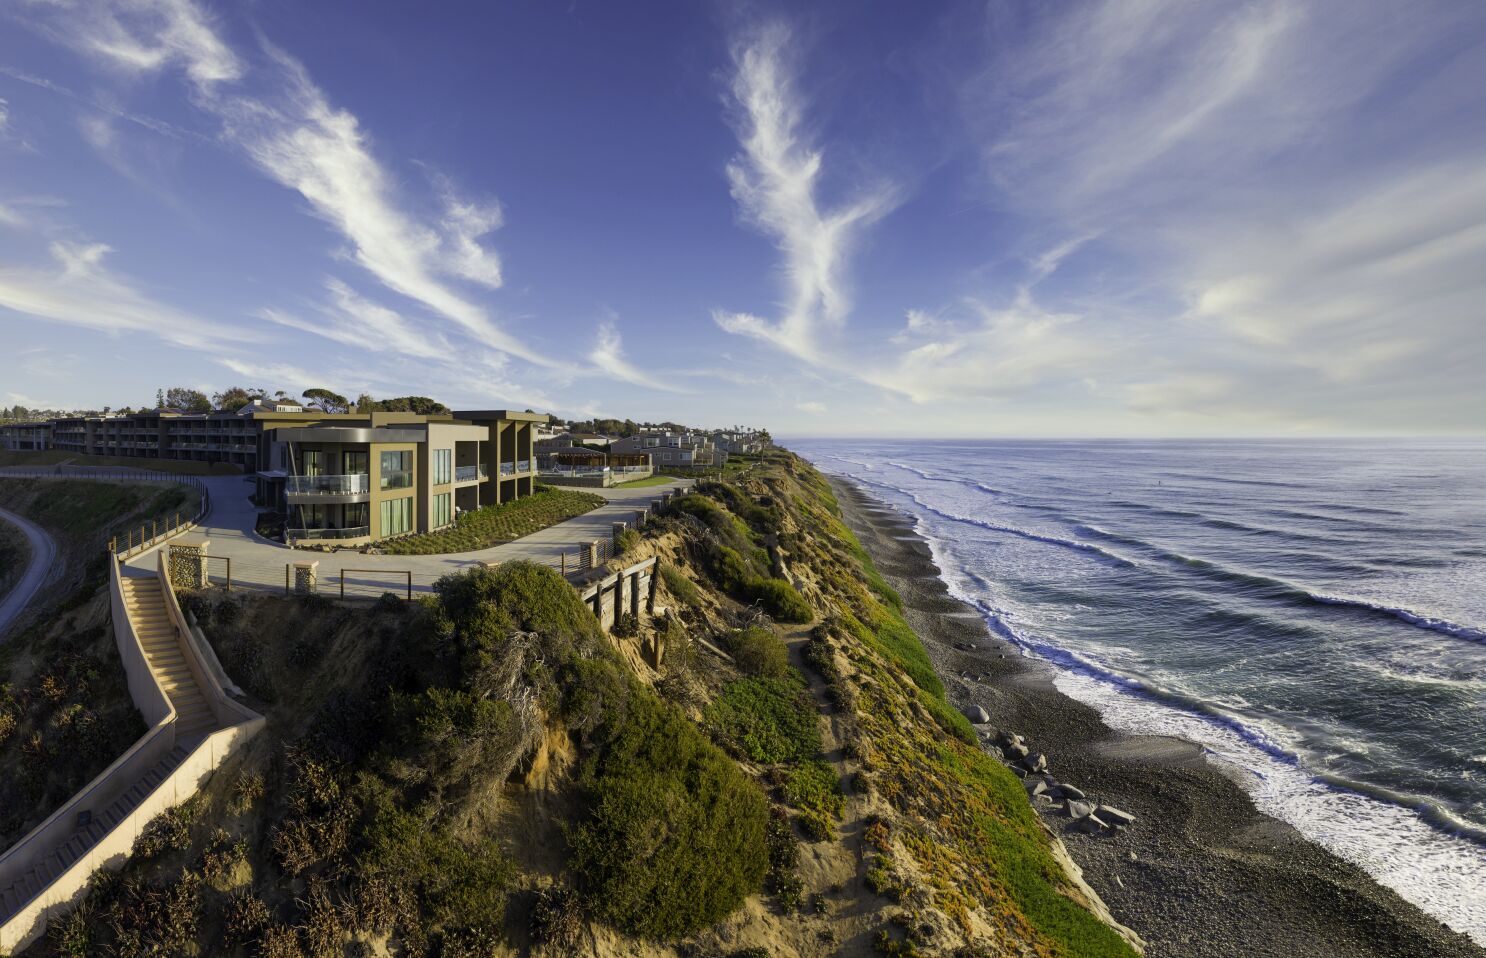 New Clifftop Resort Opens In Encinitas The San Diego Union Tribune